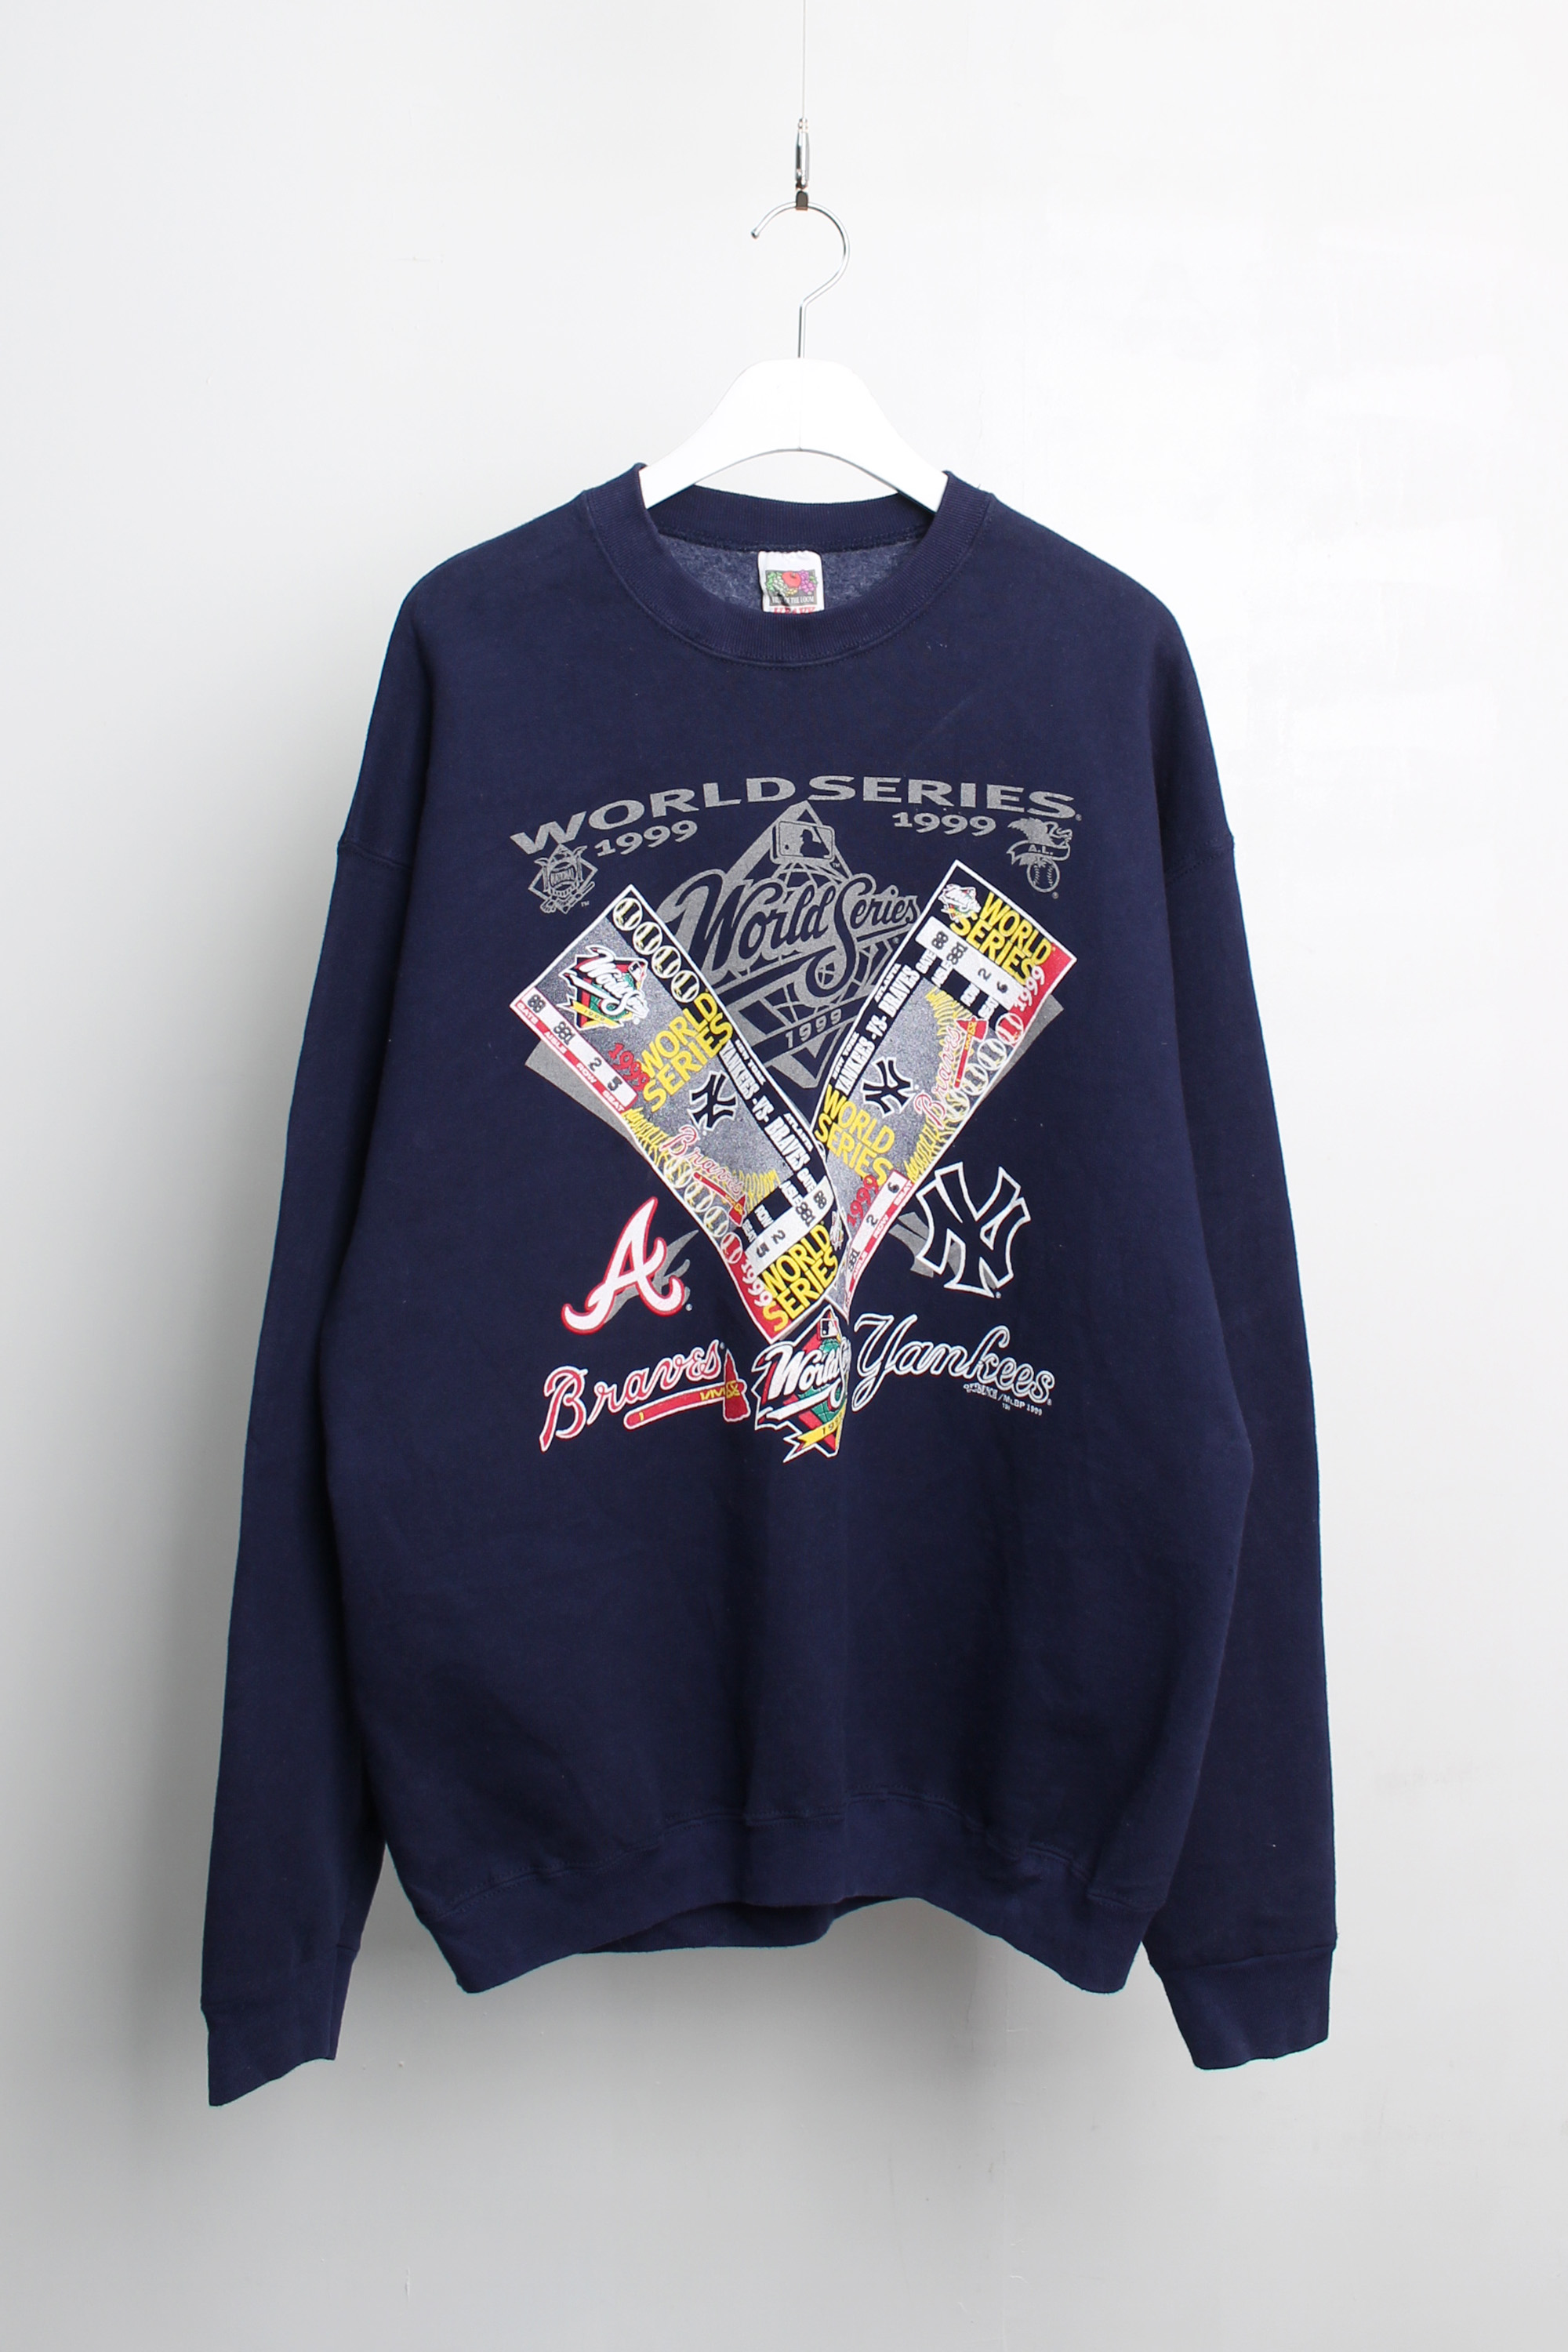 1999 WORLD SERIES sweatshirts